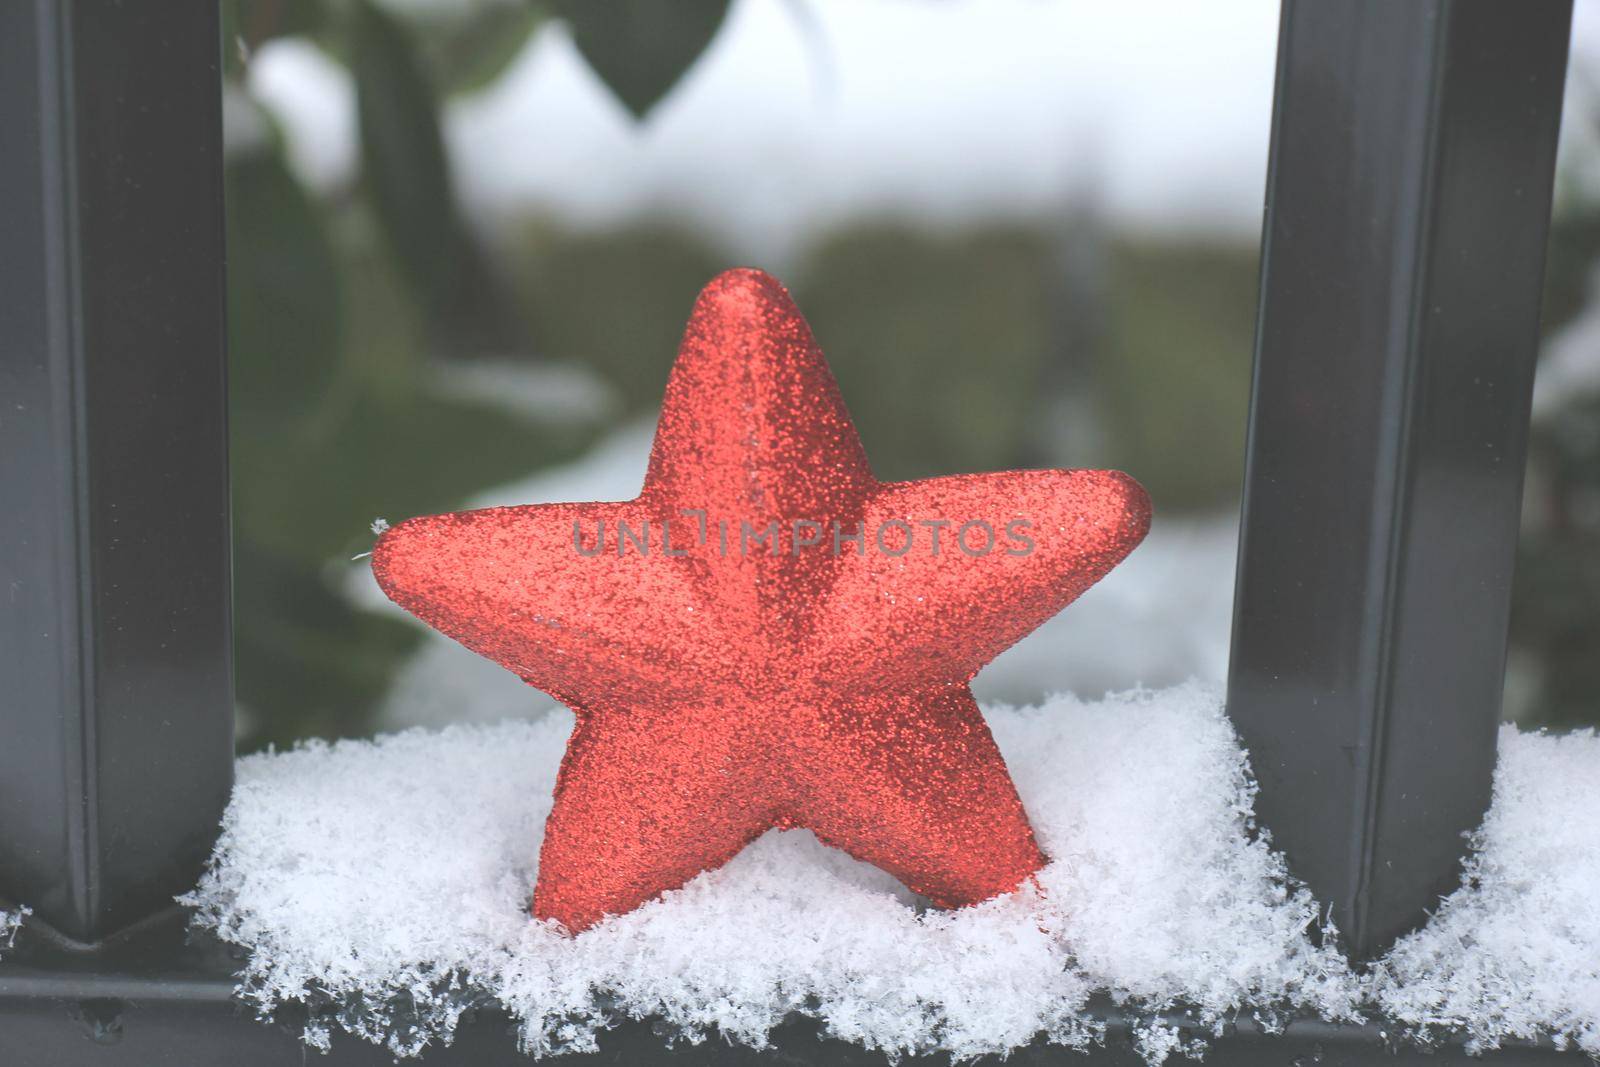 Red star ornament in fresh fallen snow